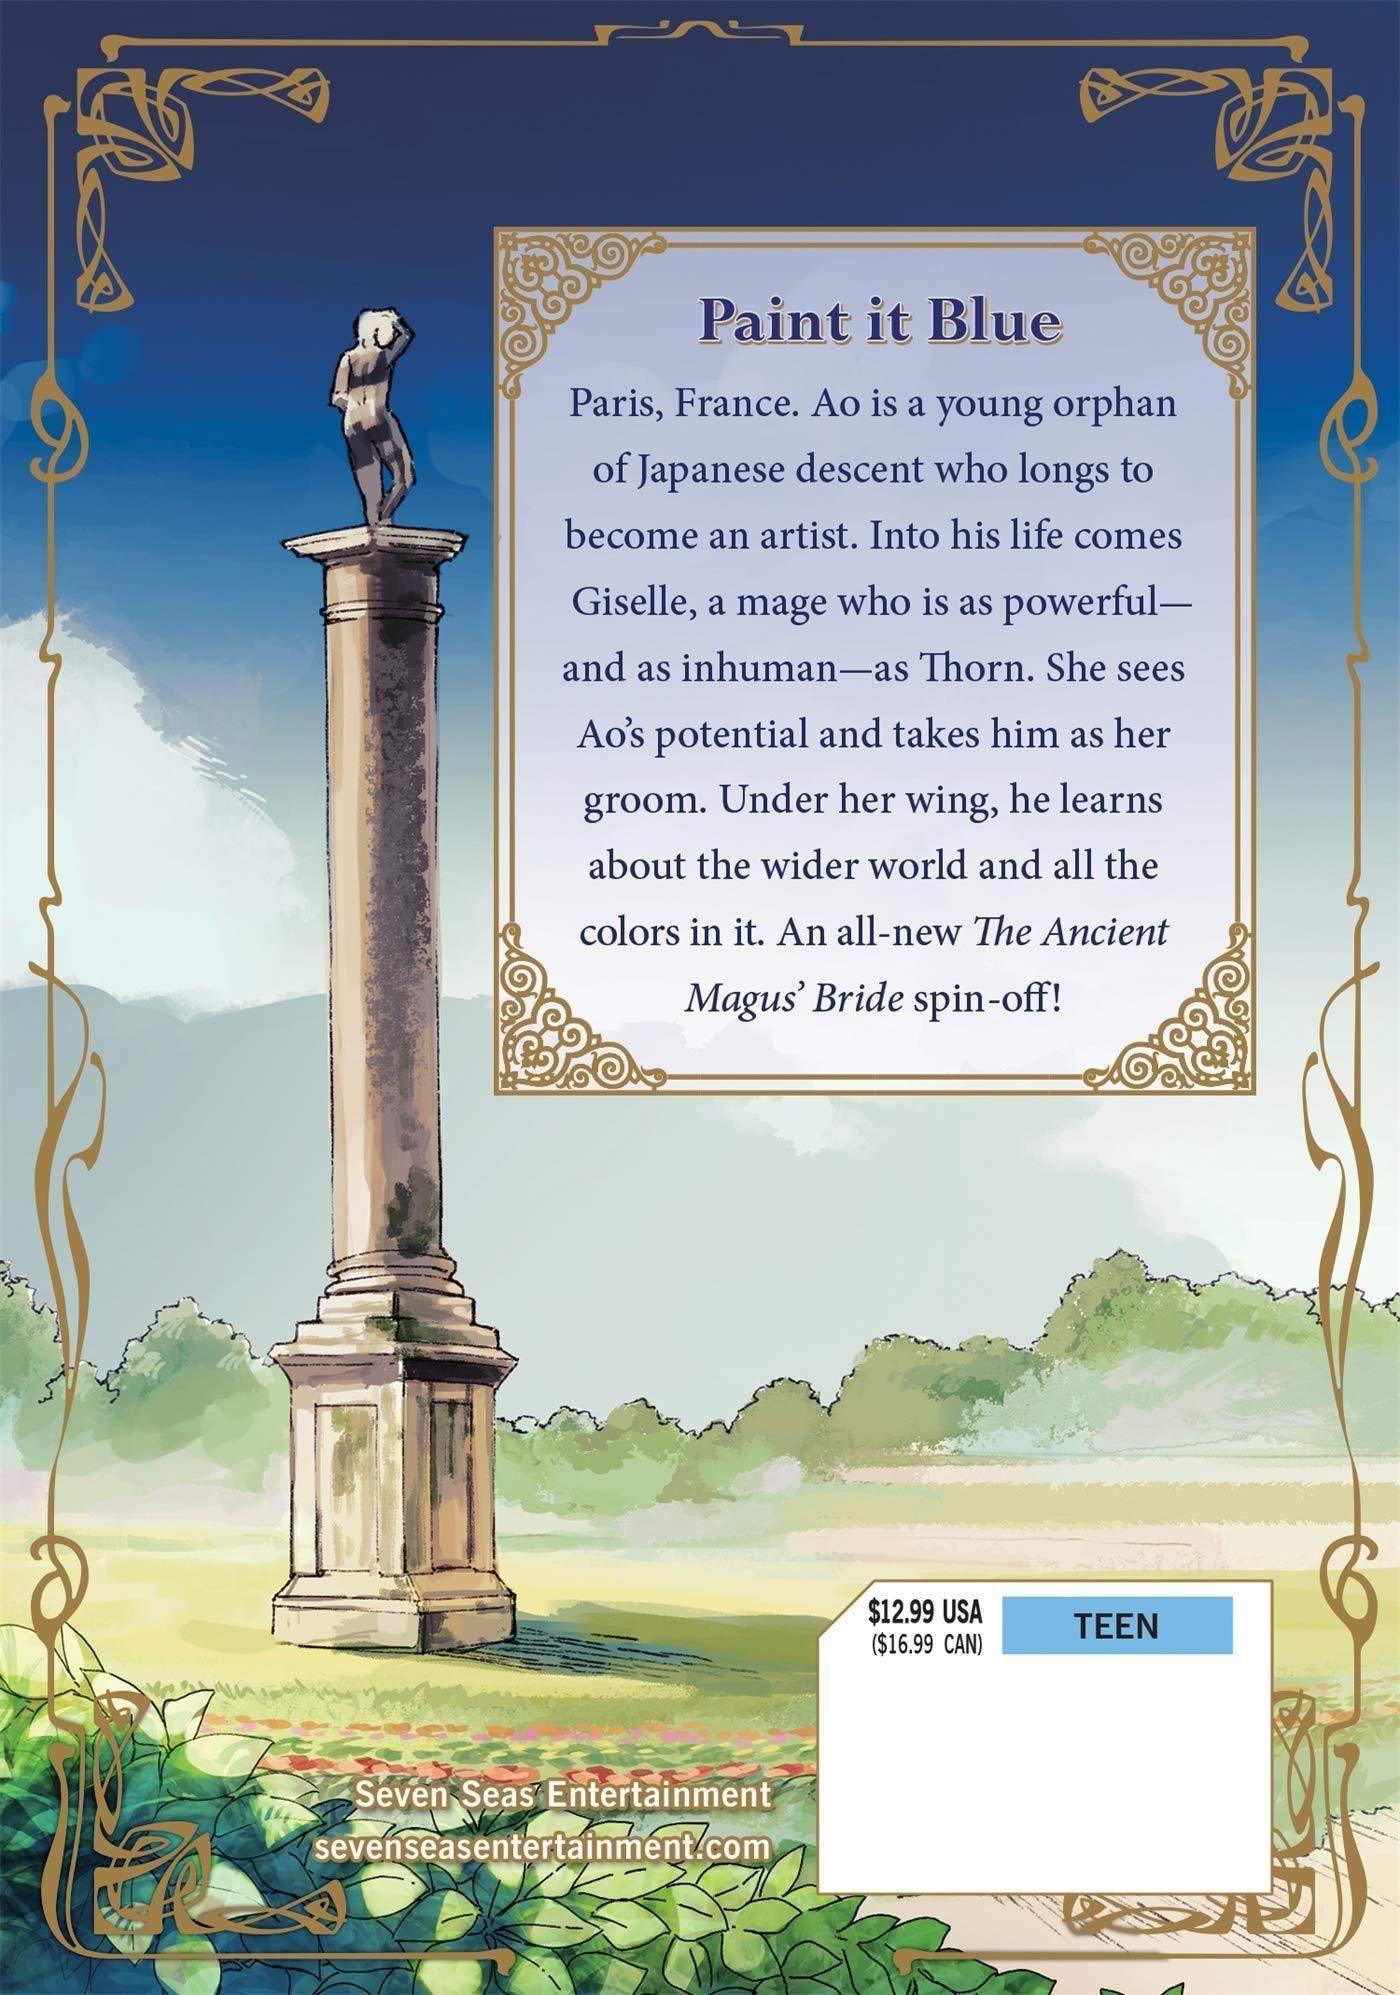 The Ancient Magus’ Bride: Wizard’s Blue (Manga) Vol. 1 - Tankobonbon